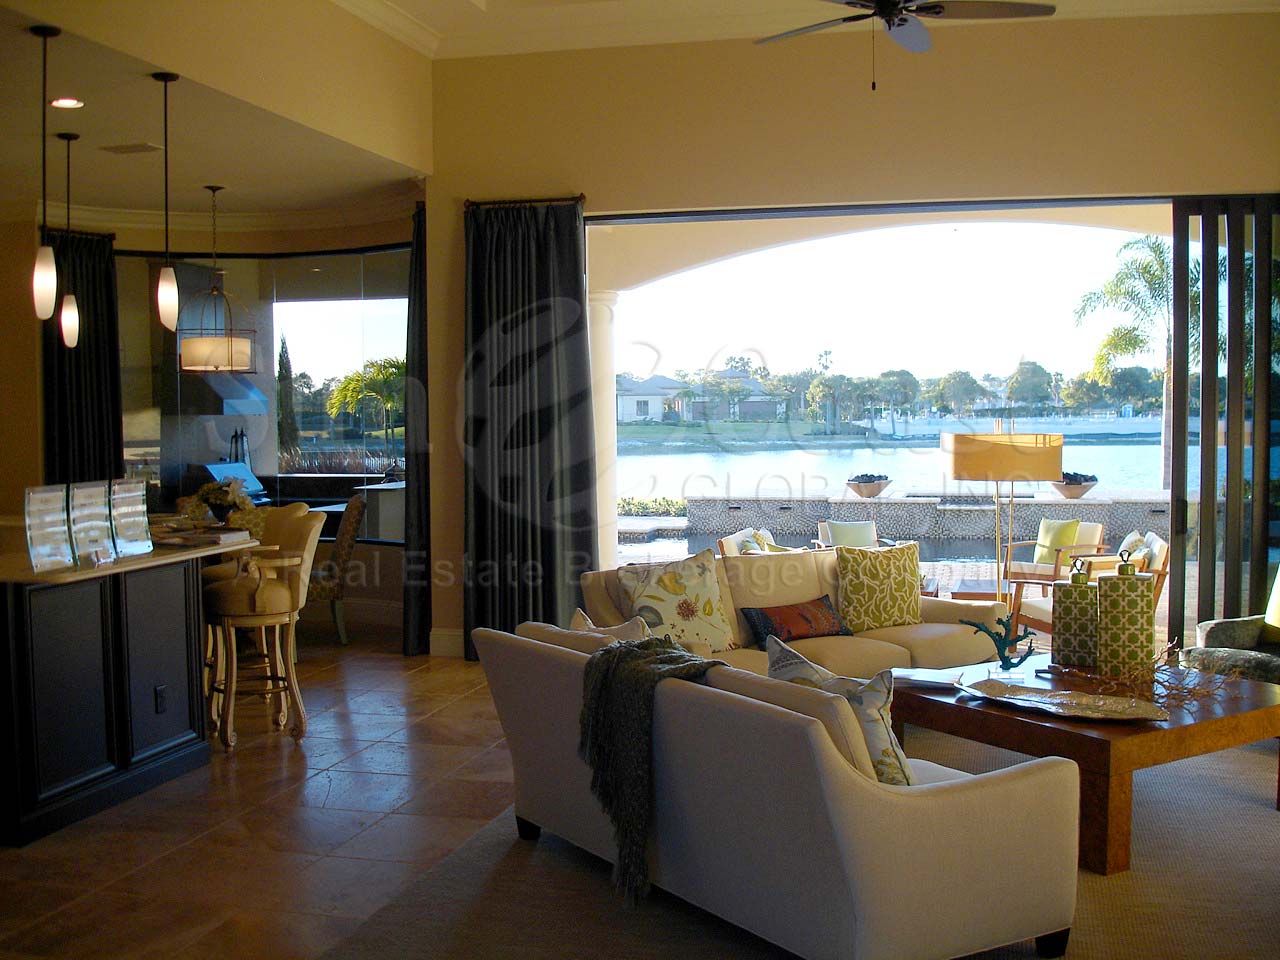 QUAIL WEST Sunnyslope Home Interior Example